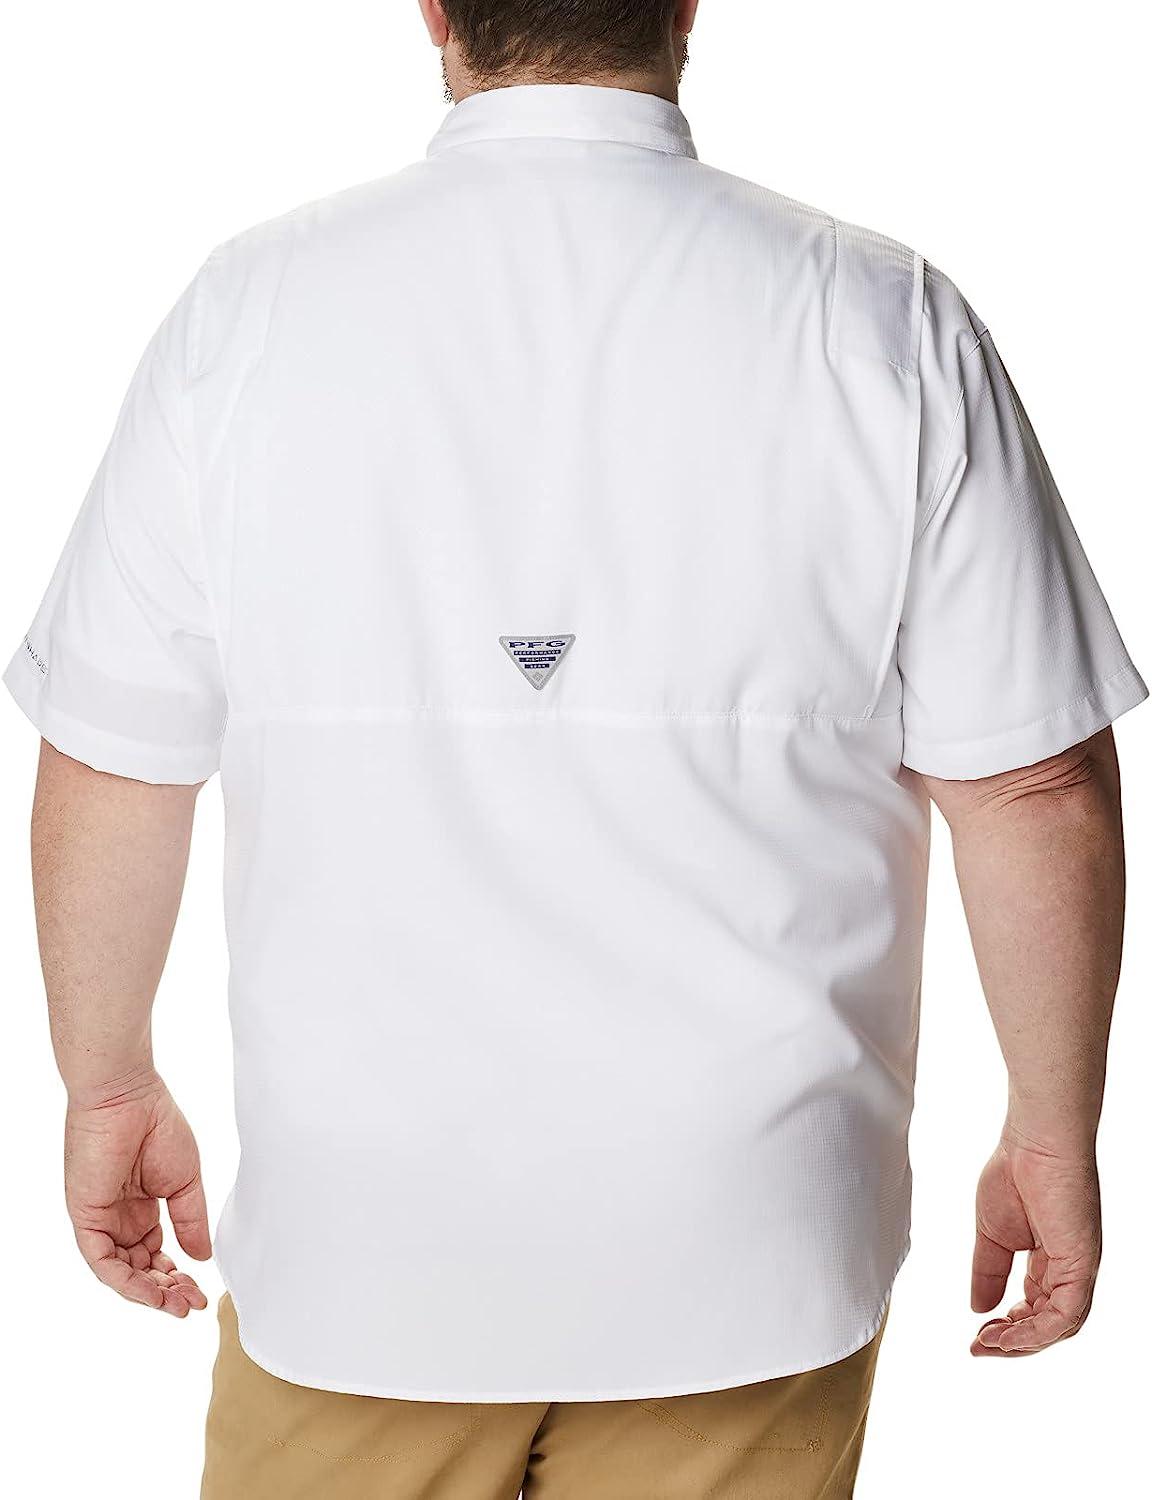 COLUMBIA PFG Men's Button Up Fishing Shirt LARGE Short Sleeve Vented White